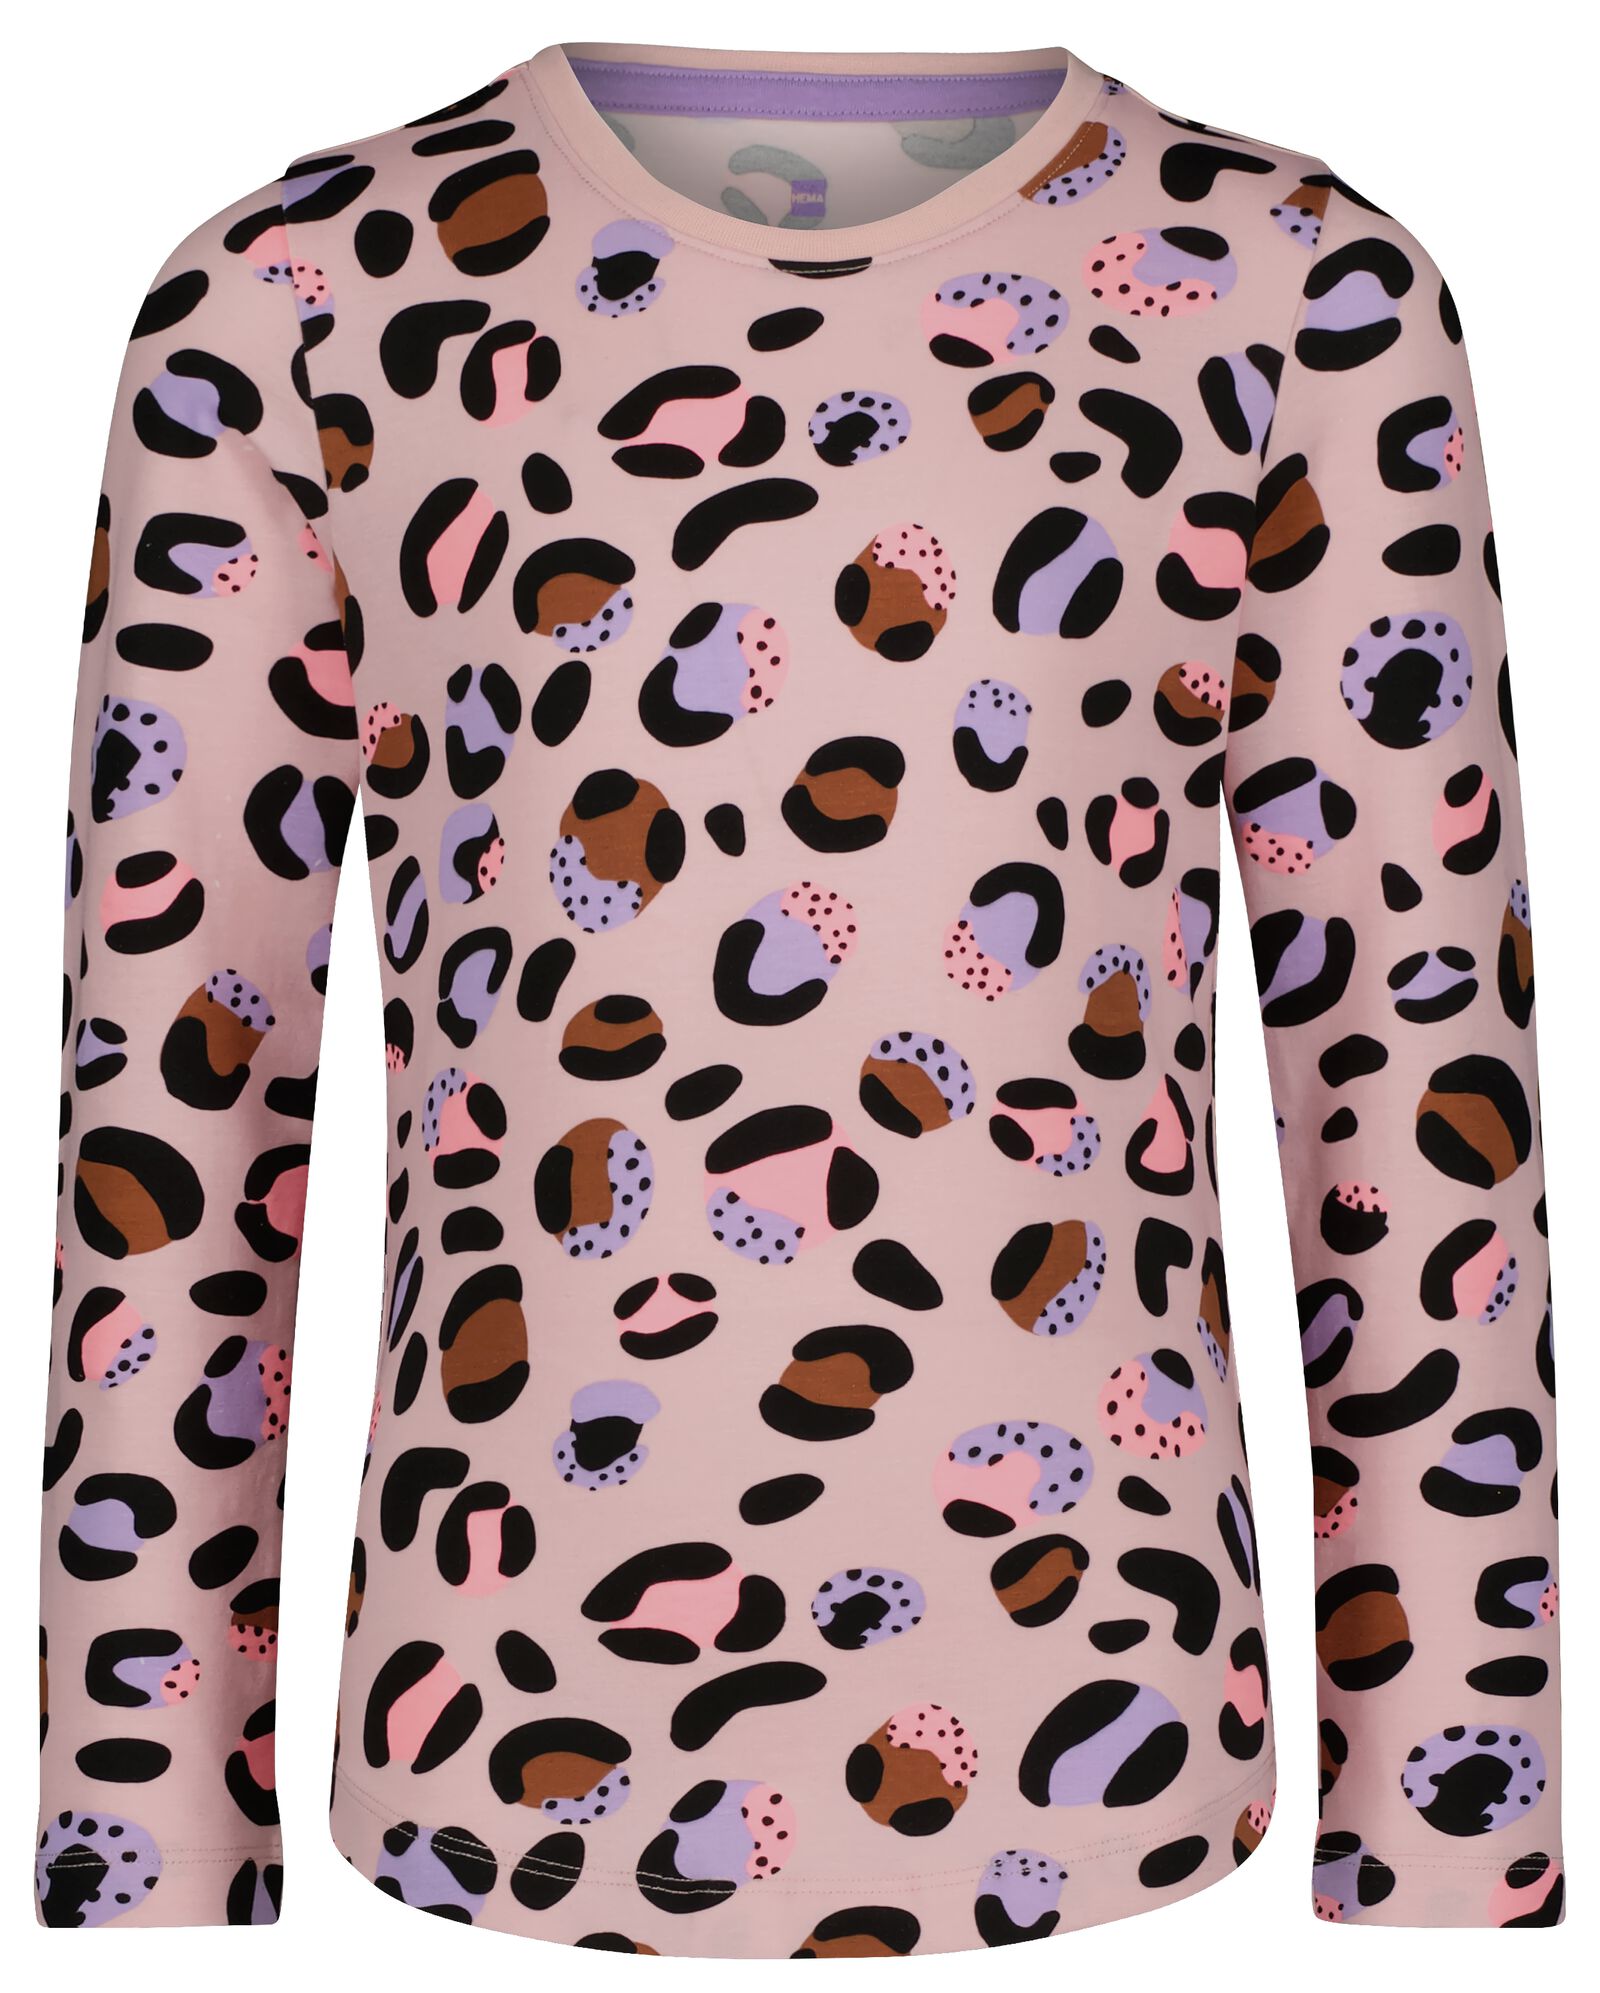 pyjama enfant coton/stretch léopard lichtroze 110/116 - 23094223 - HEMA